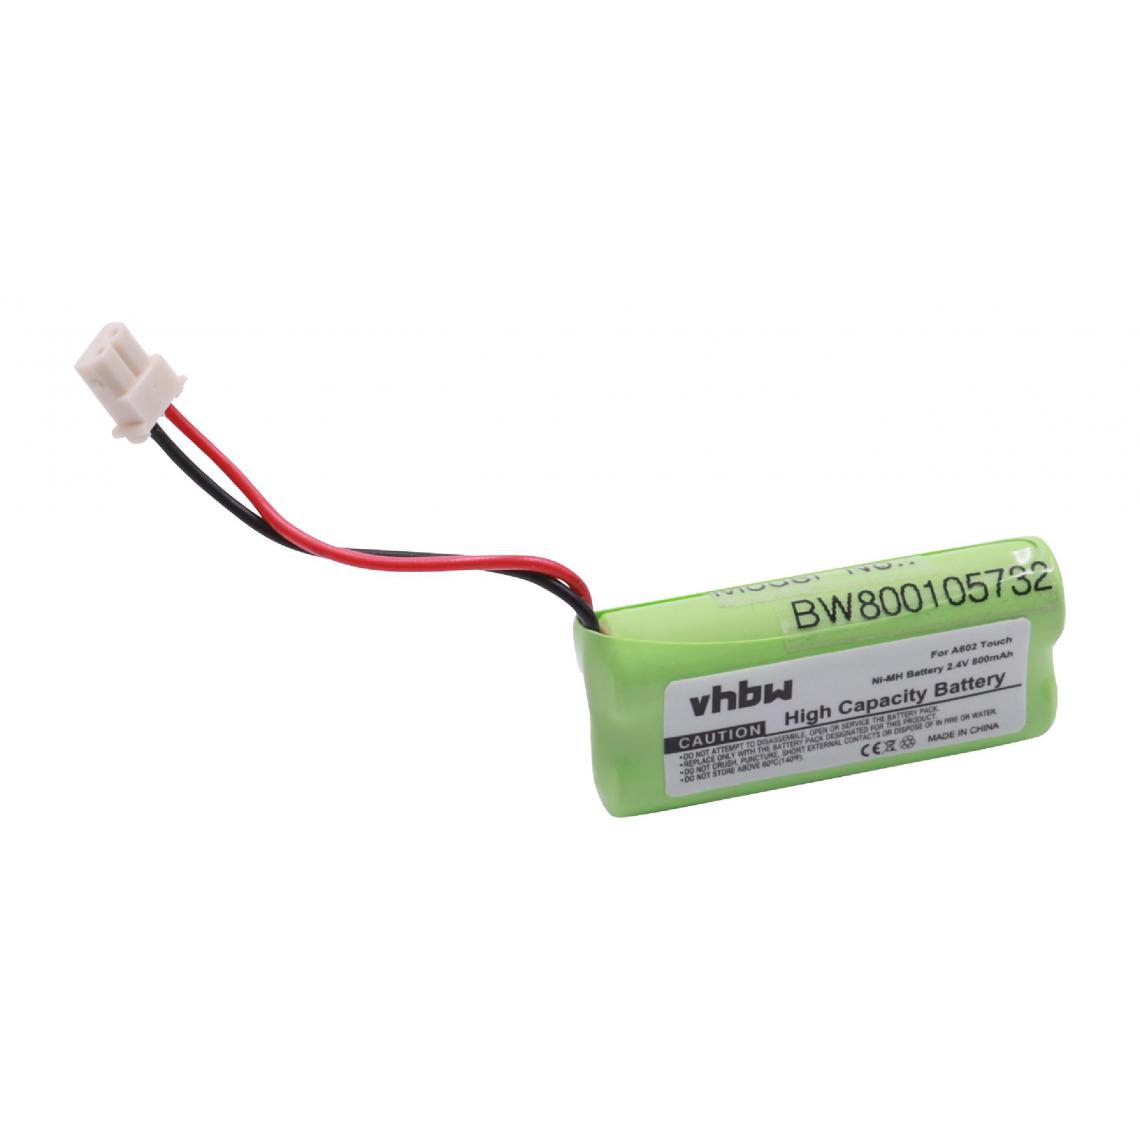 Vhbw - vhbw Batterie compatible avec V-Tech CS6328, CS6328-2, CS6328-3, CS6328-4, CS6328-5 téléphone fixe sans fil (800mAh, 2,4V, NiMH) - Batterie téléphone